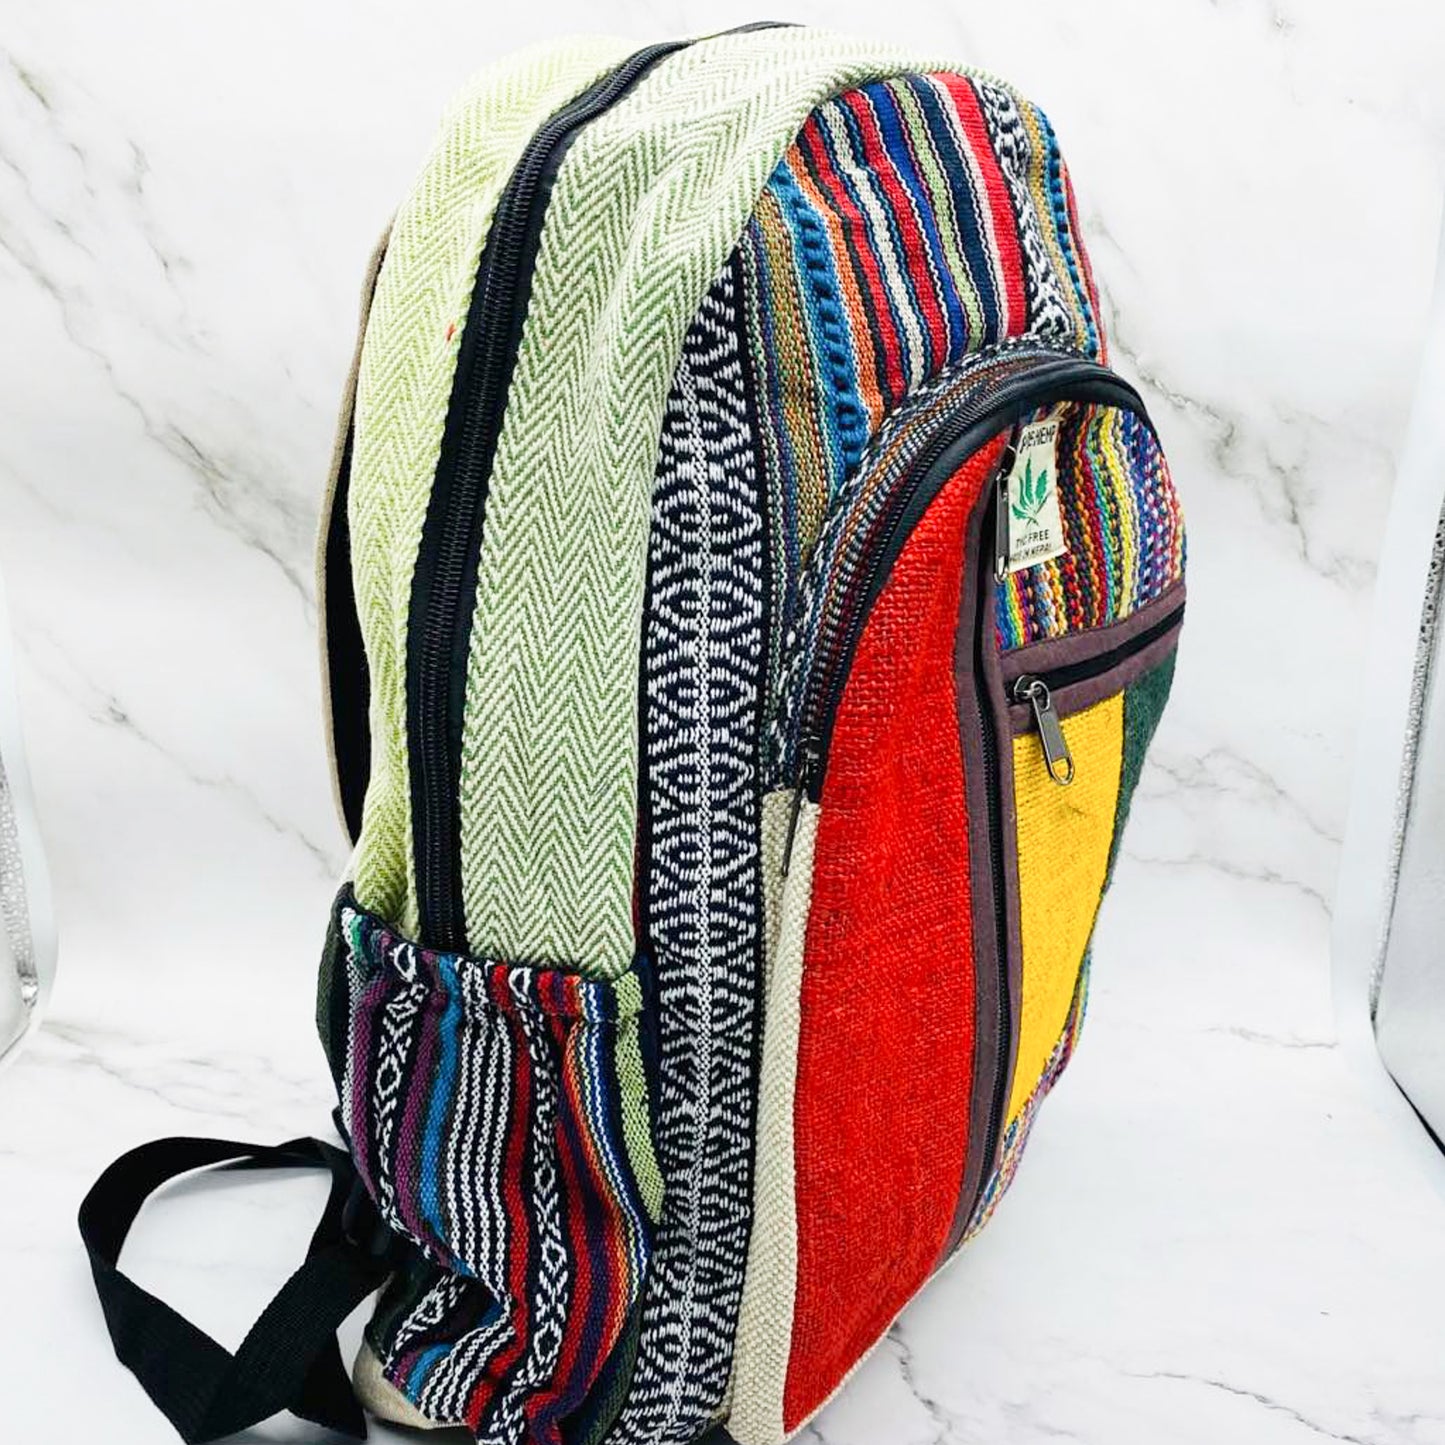 Large Hemp Rasta Backpack, Ruck sack with Laptop Pockets, Hippie Bags, Hiking Travel Backpack, Beach Backpack, Boho Bags, Ecofriendly Bags